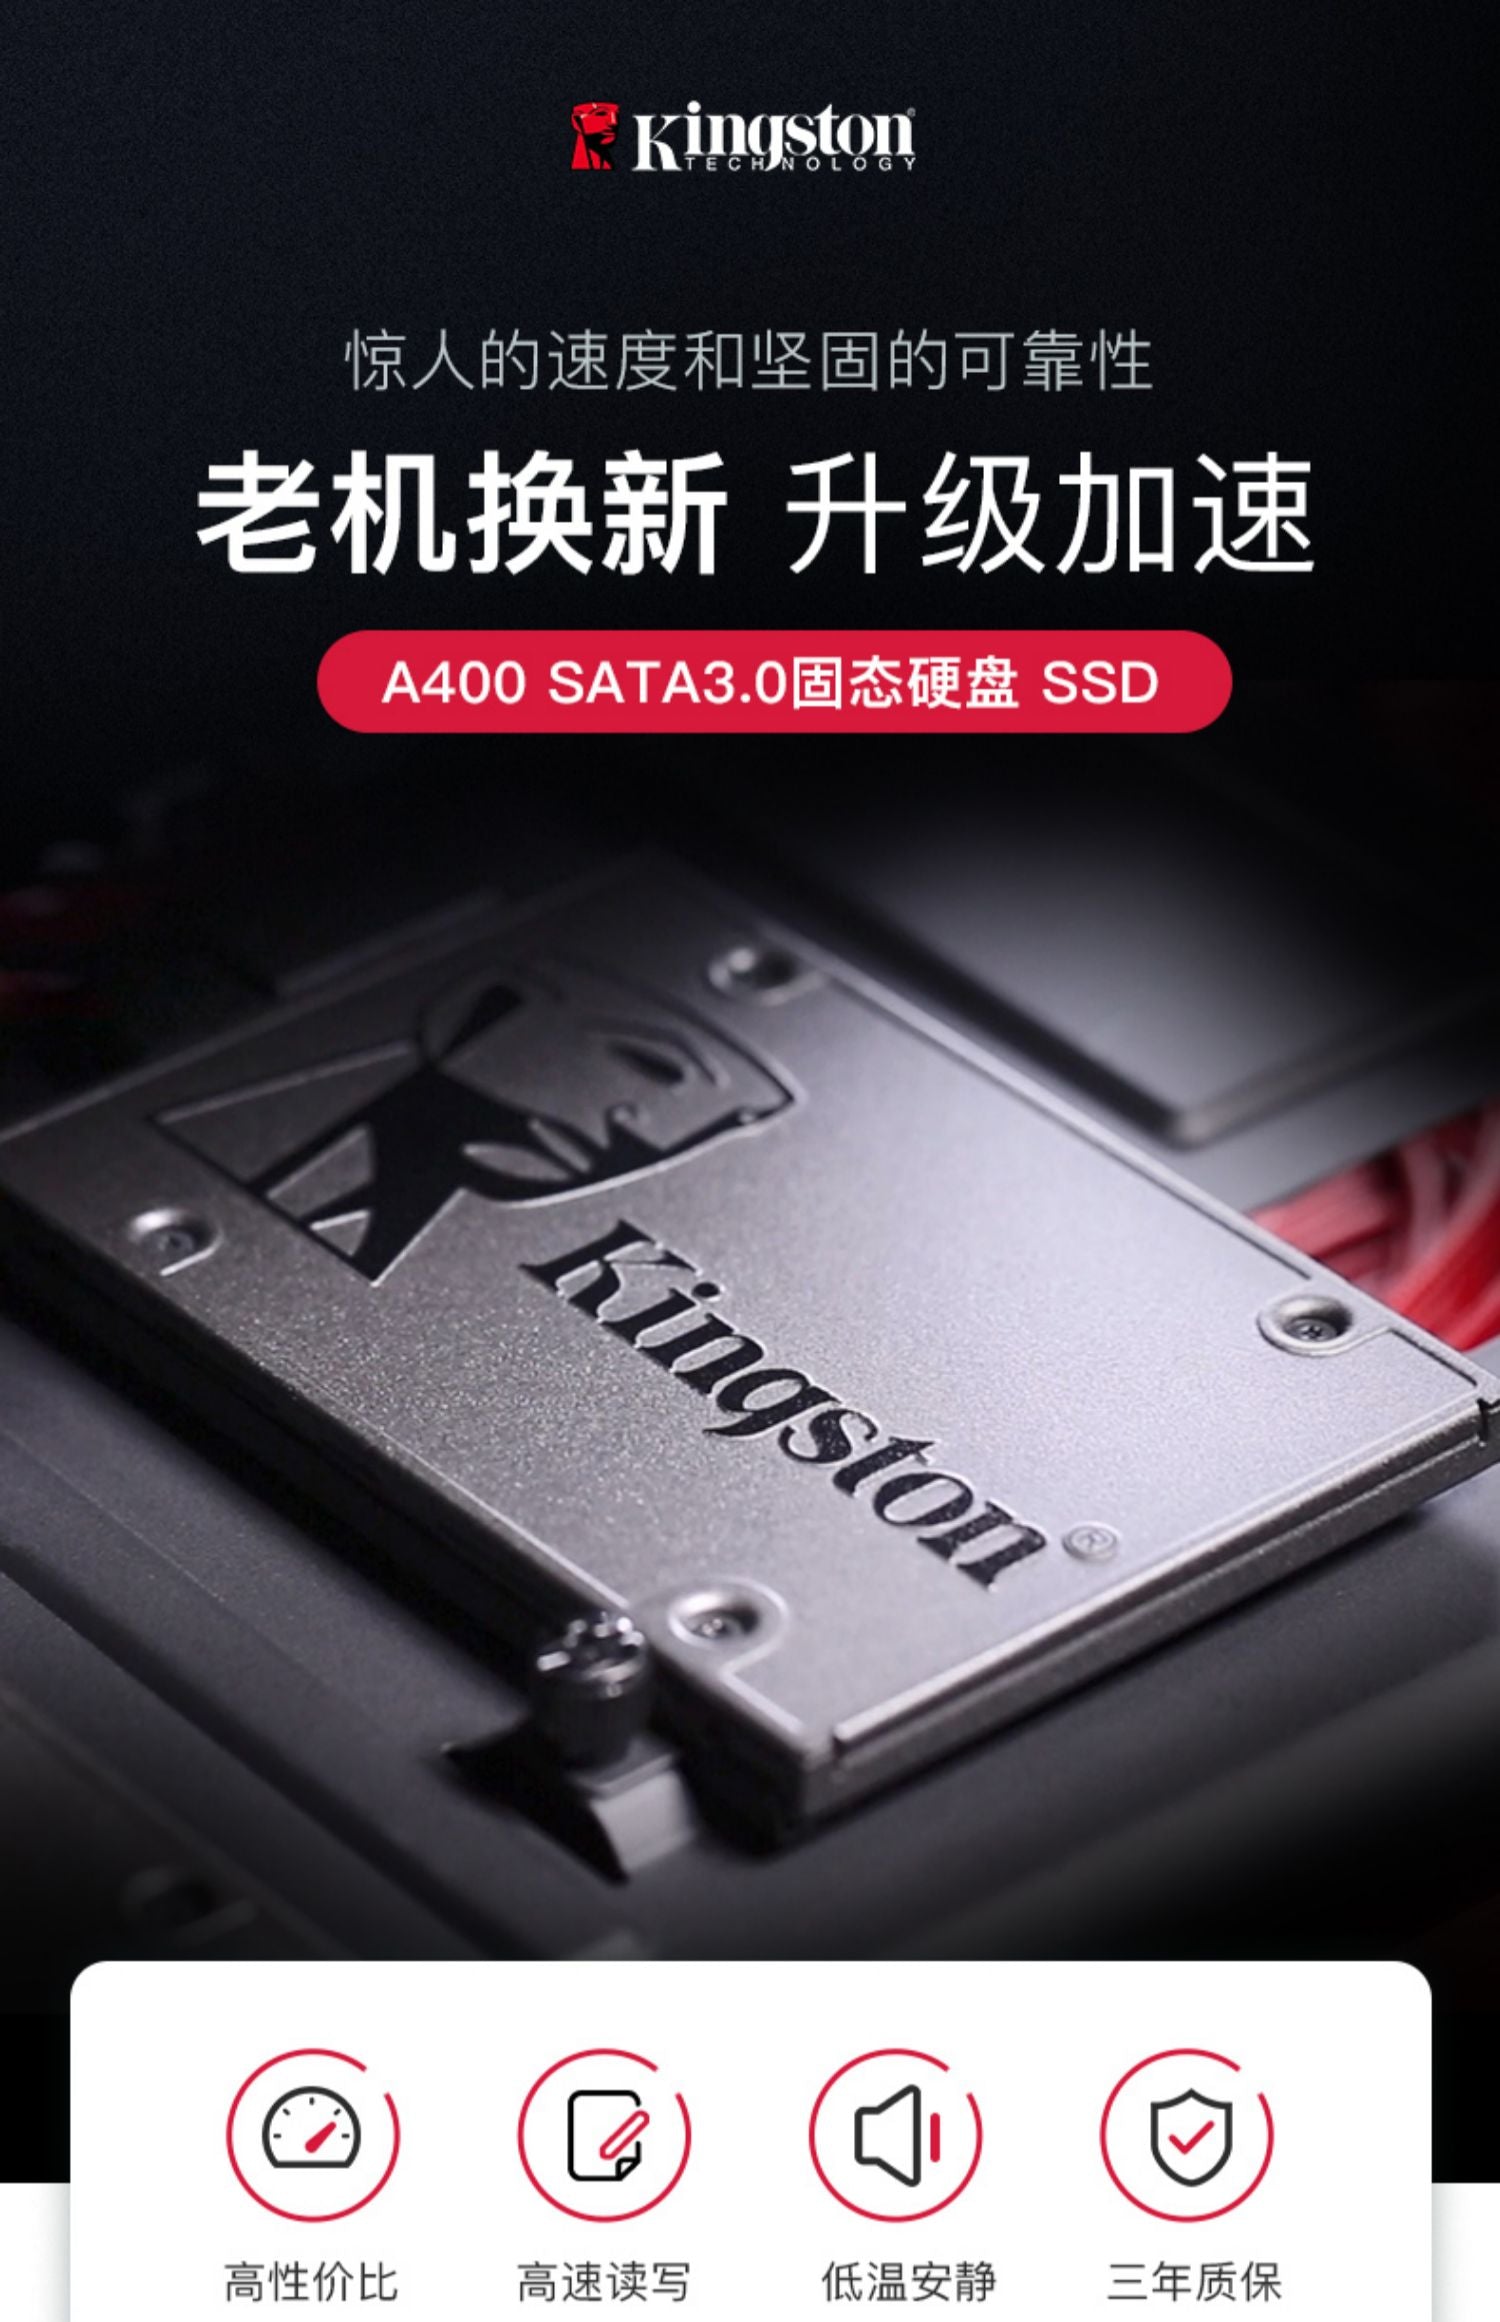 Kingston A400 120G 240G 480G 960G solid hard disk SATA3 desktop 凱盛生活數碼